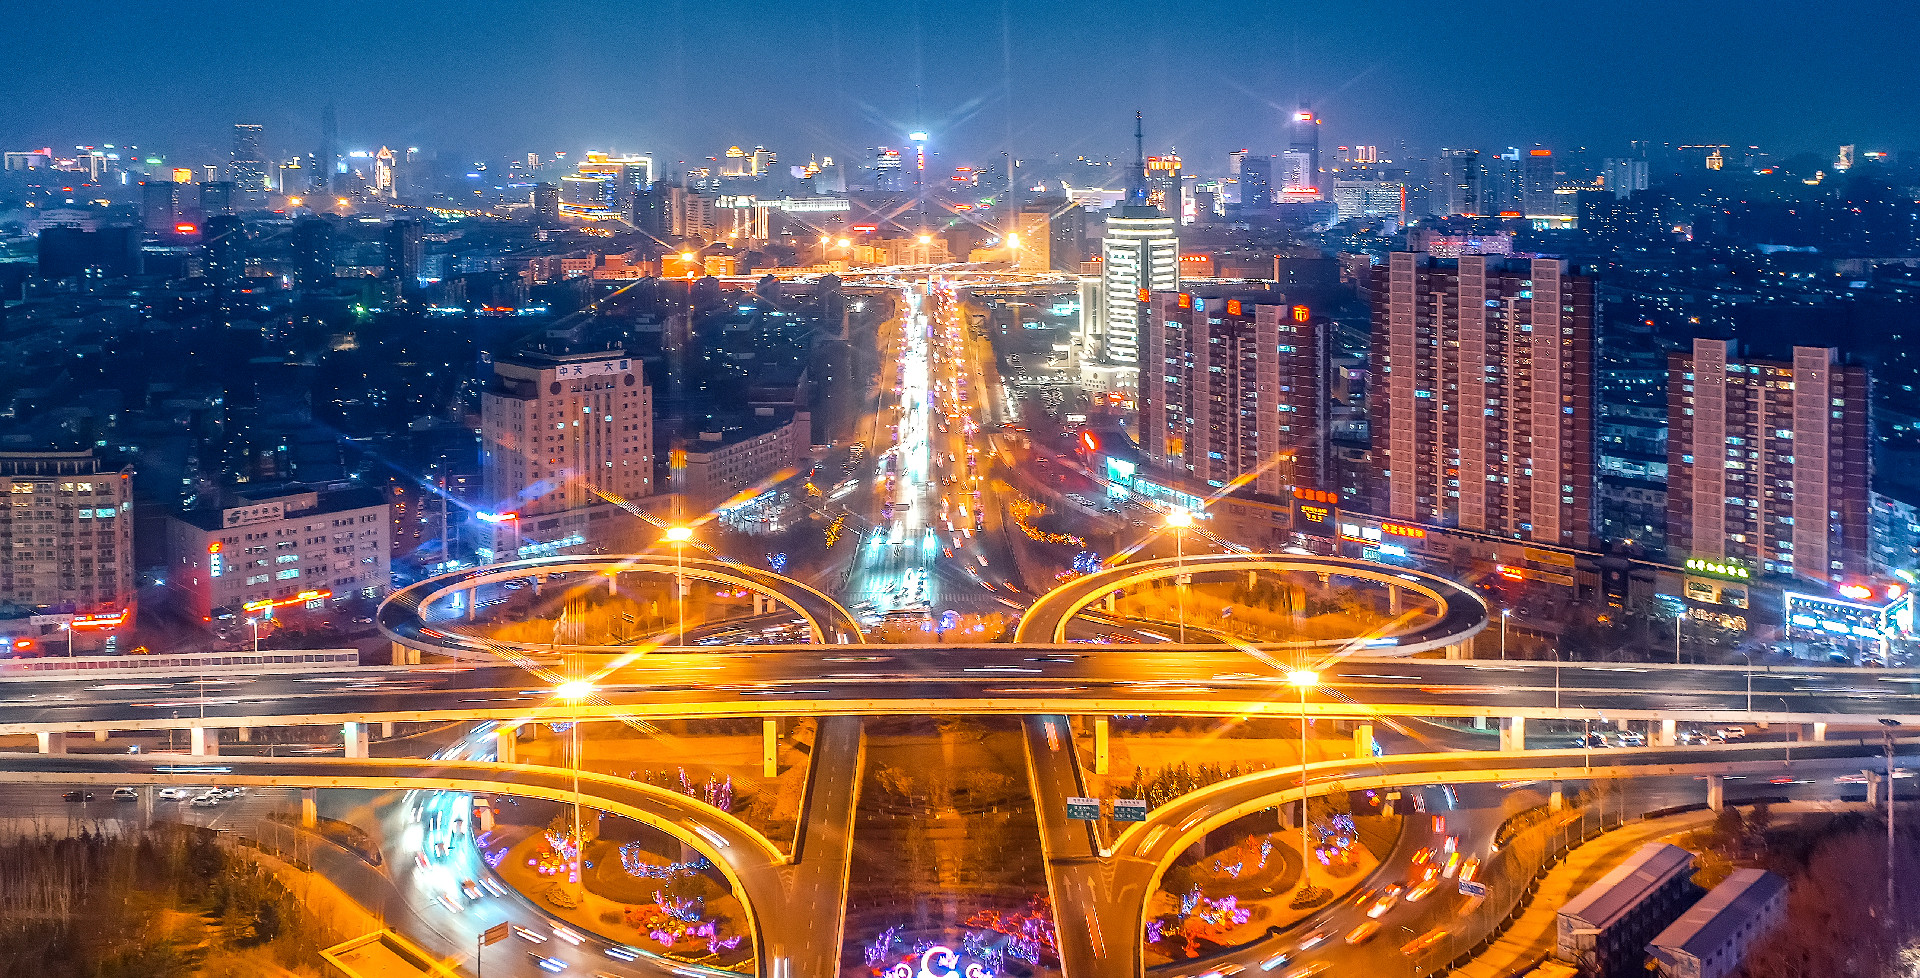 Changchun, Jilin selected in top 100 innovation cities list 